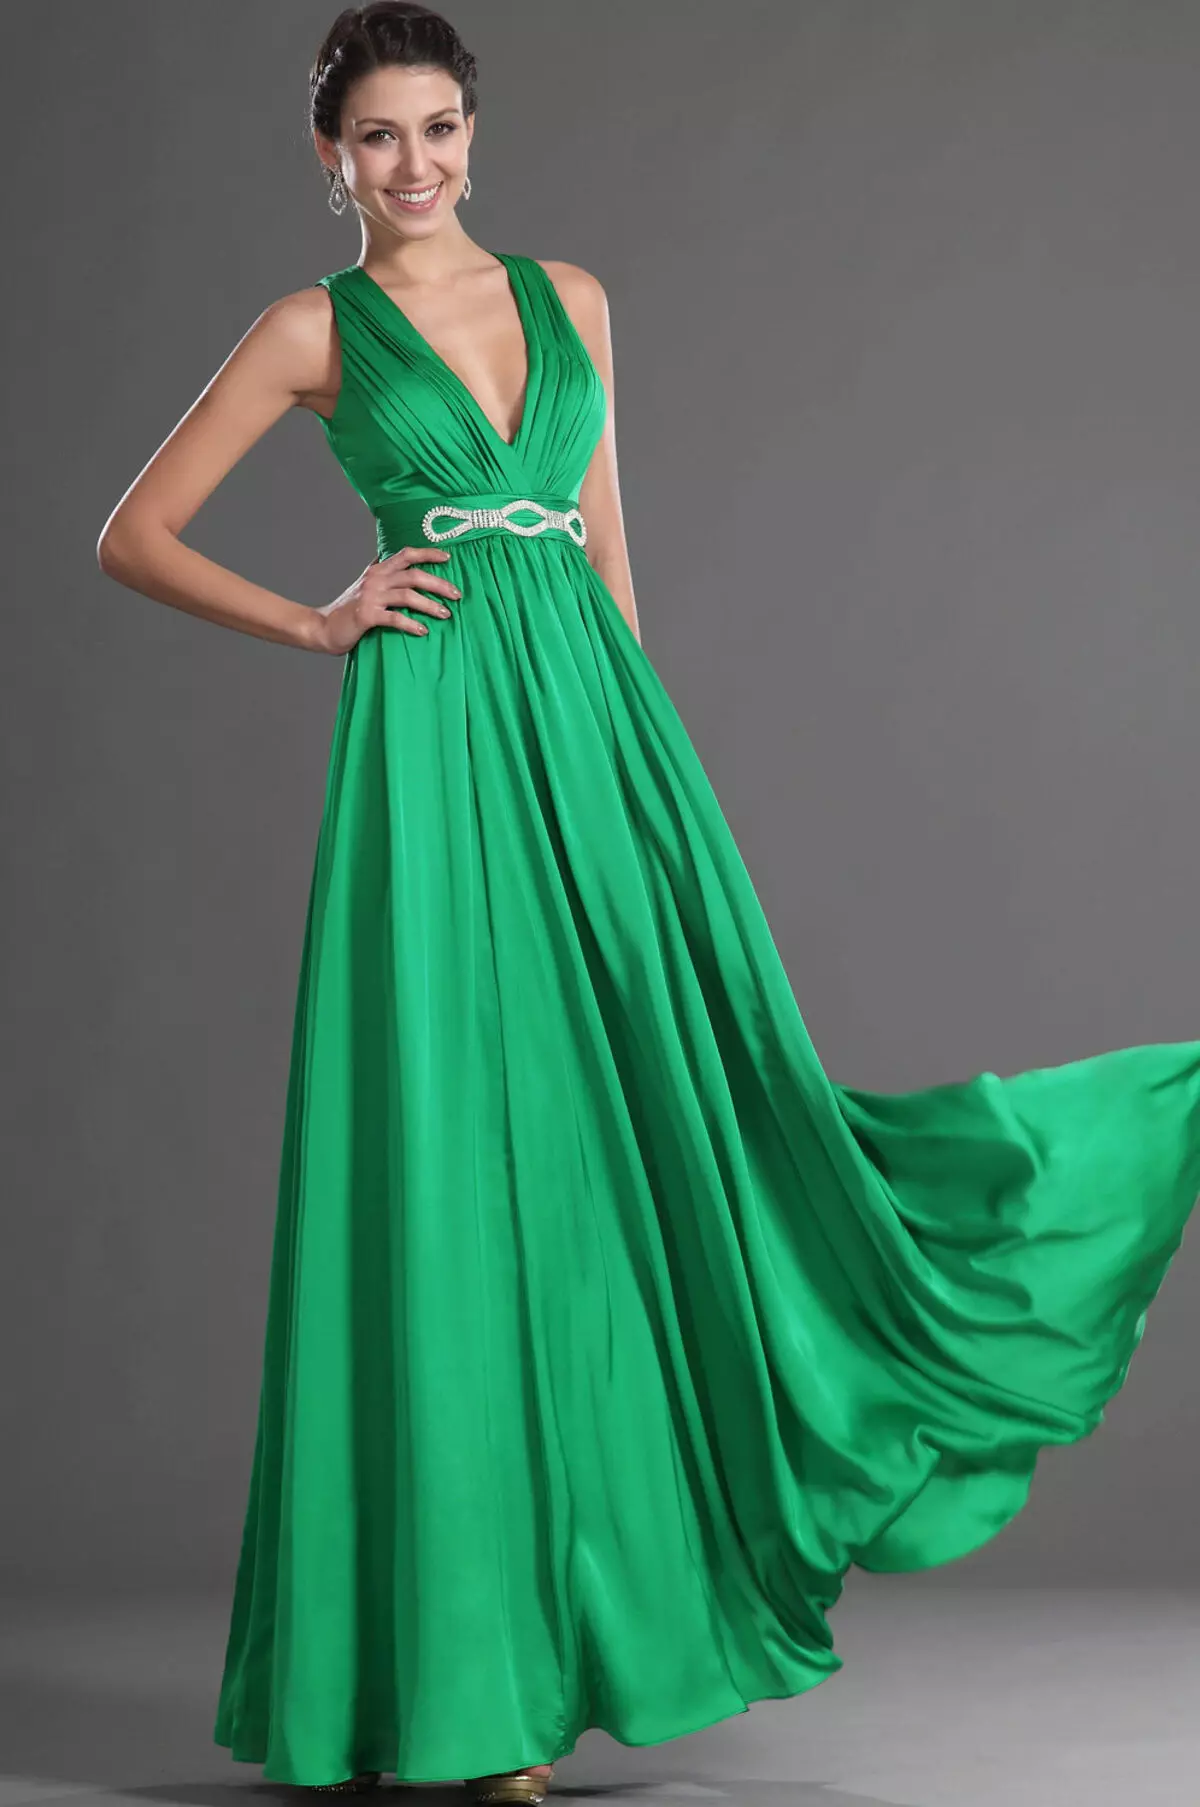 Green flowing satin dress